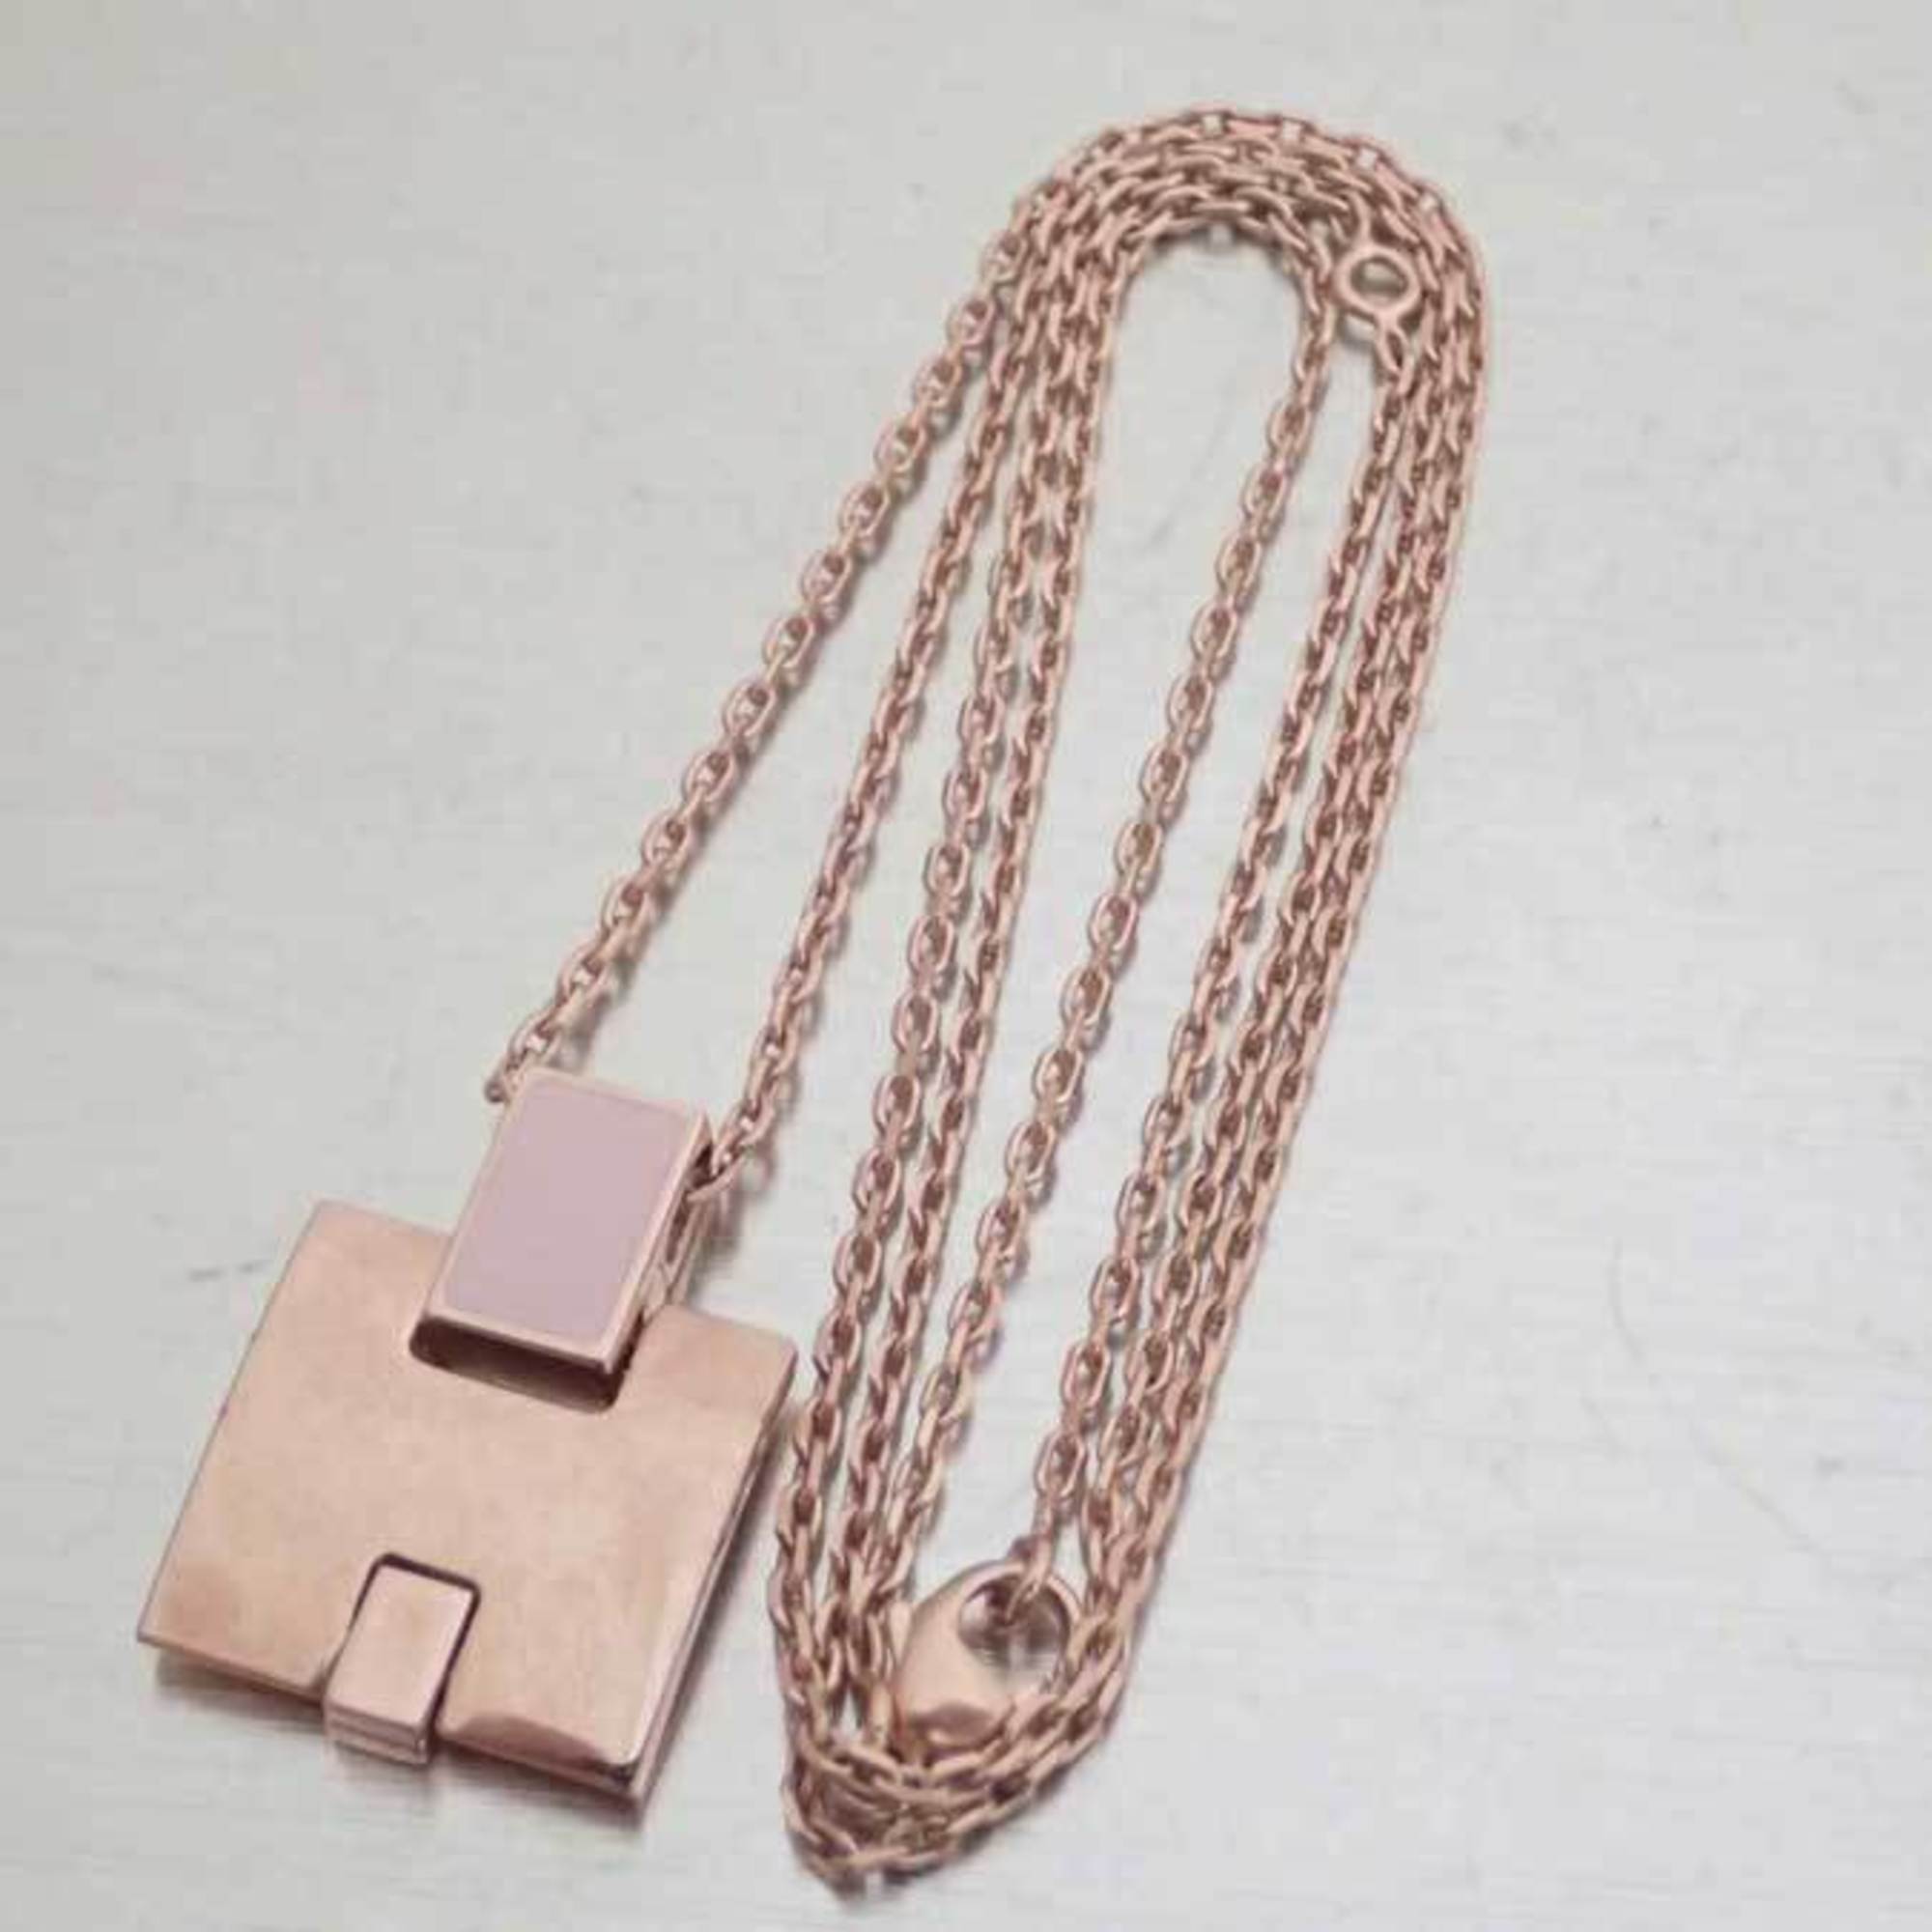 Hermes HERMES necklace earrings set Irene metal/enamel pink gold x unisex